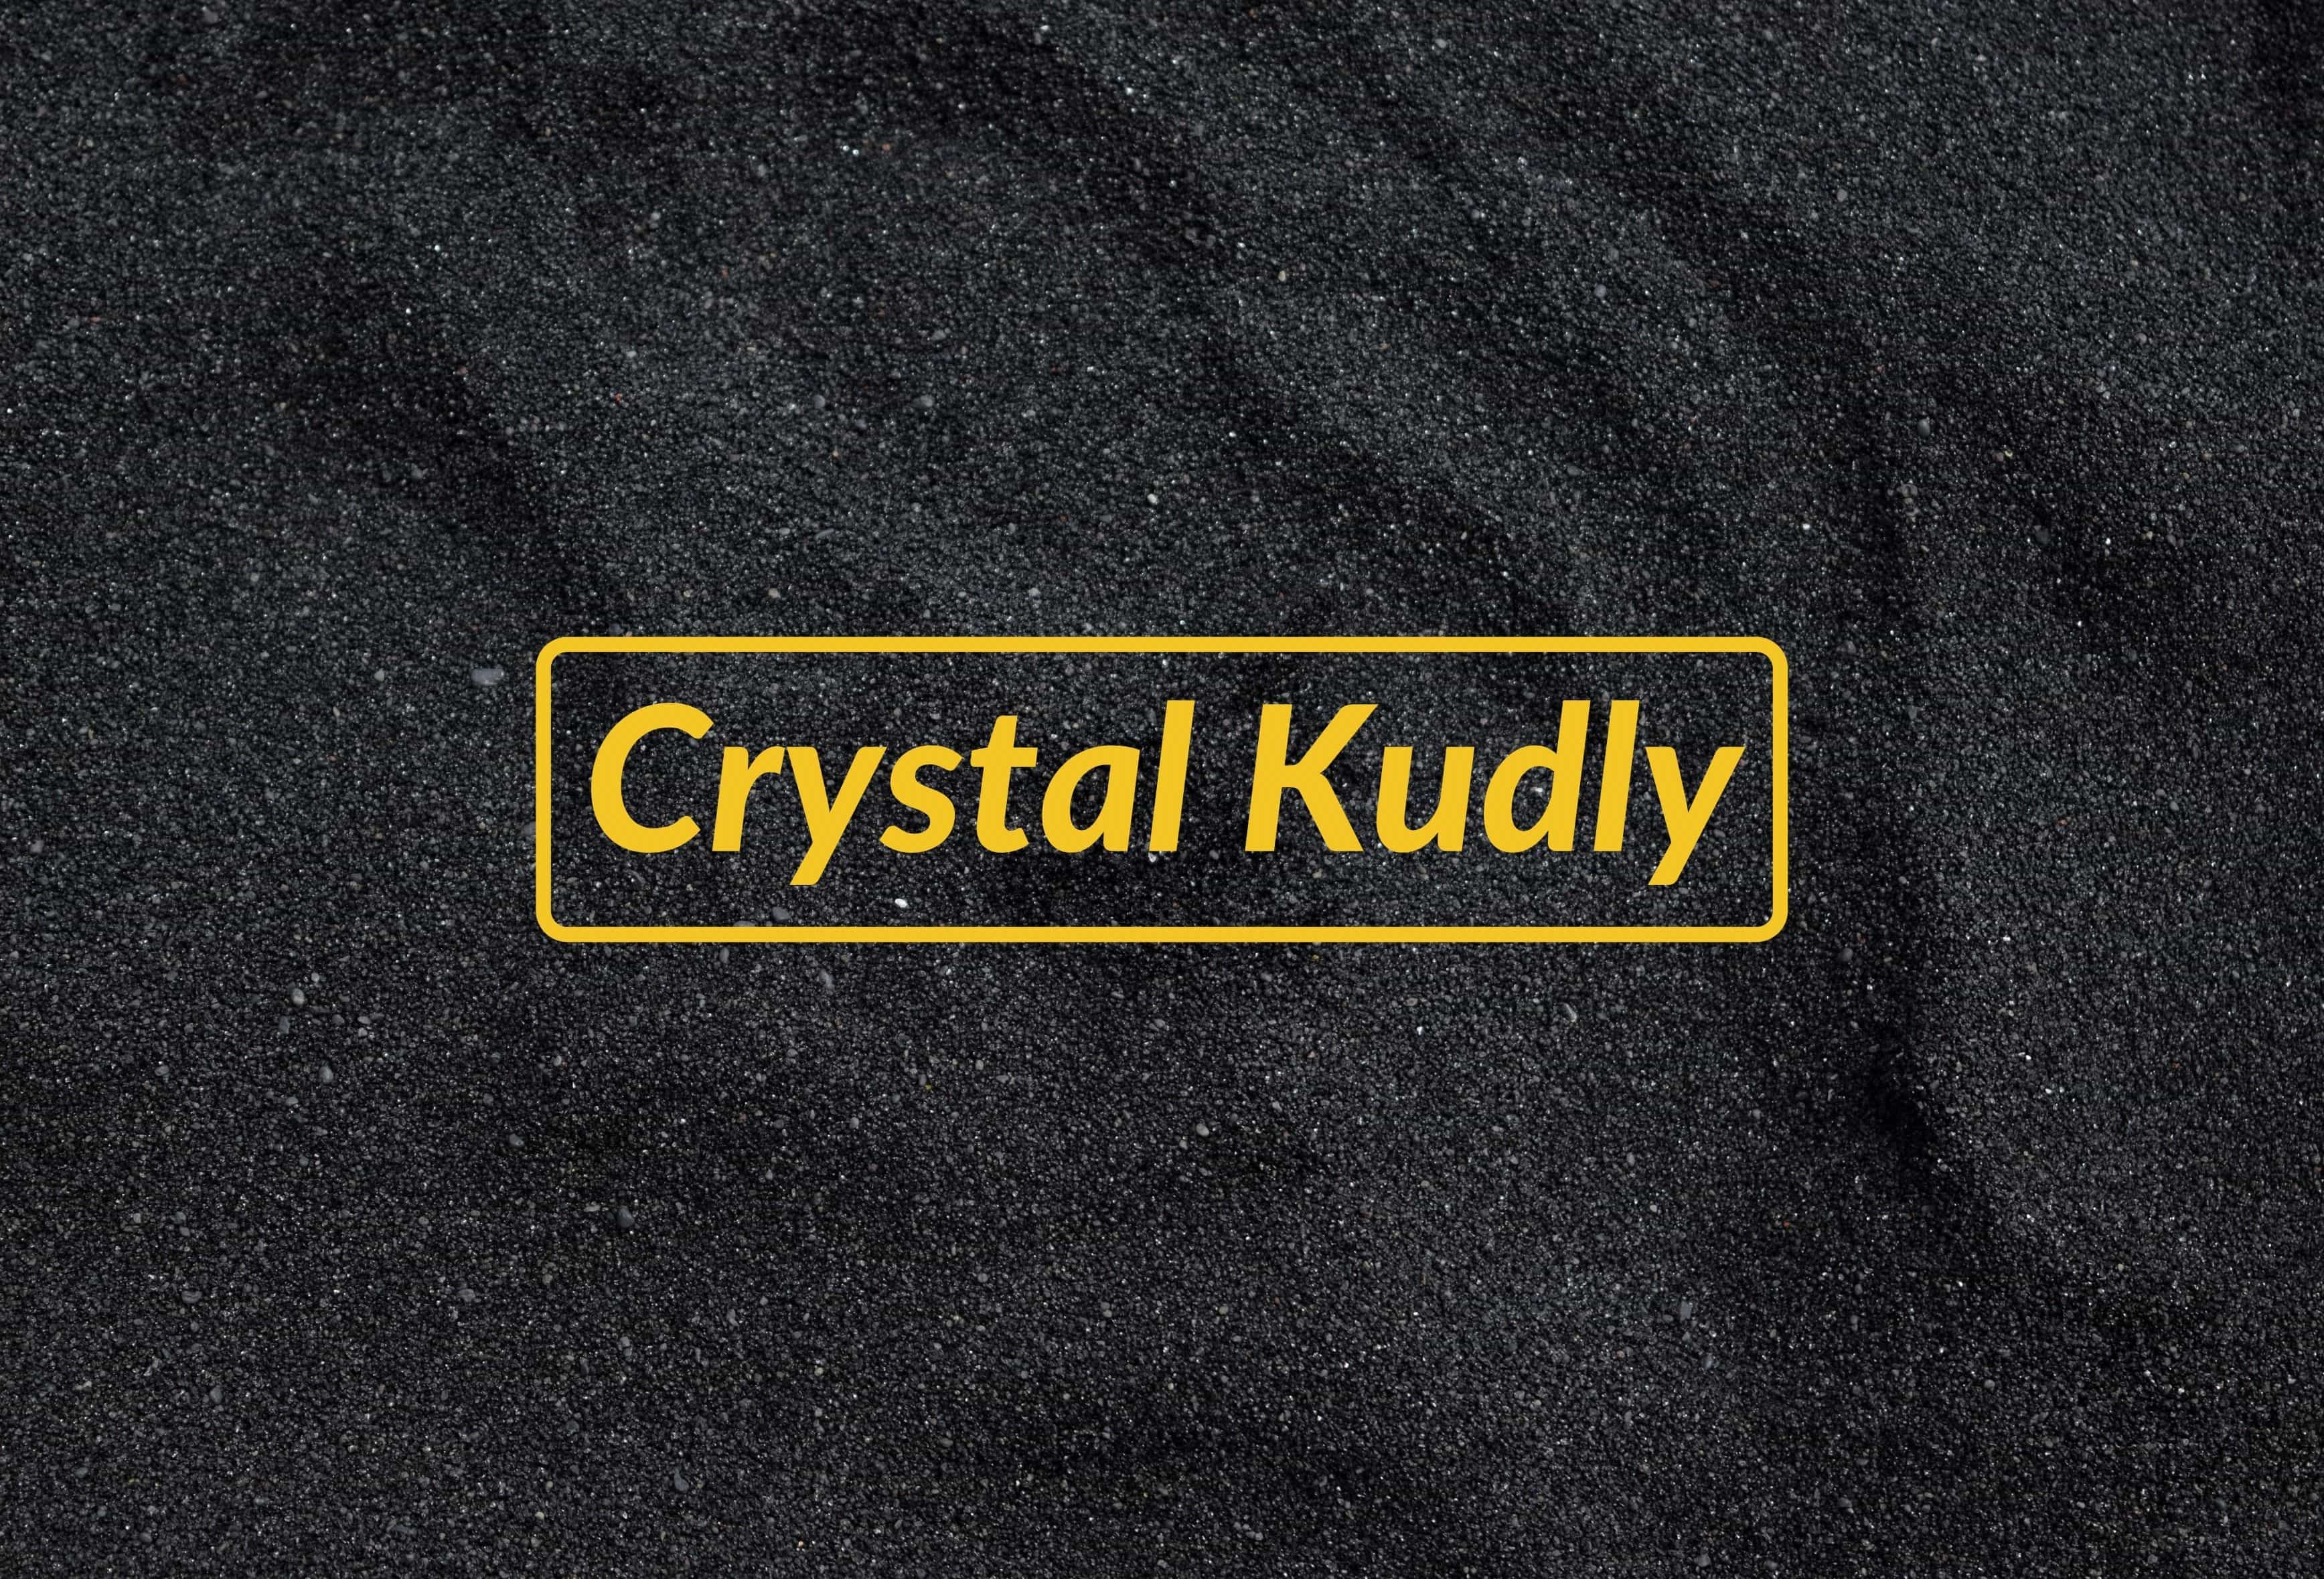 Crystal Kudly